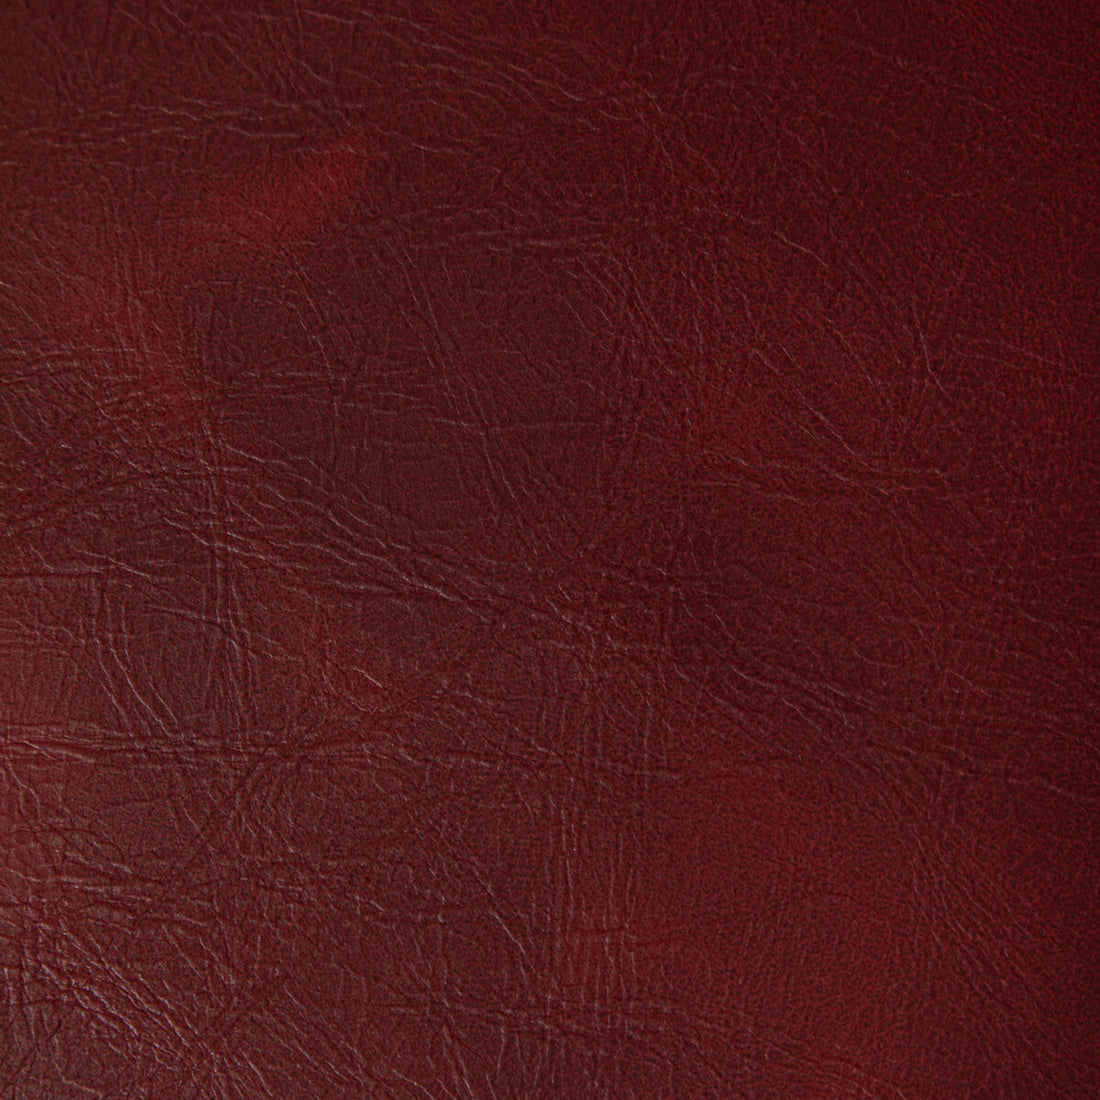 Rambler fabric in fireside color - pattern RAMBLER.909.0 - by Kravet Contract